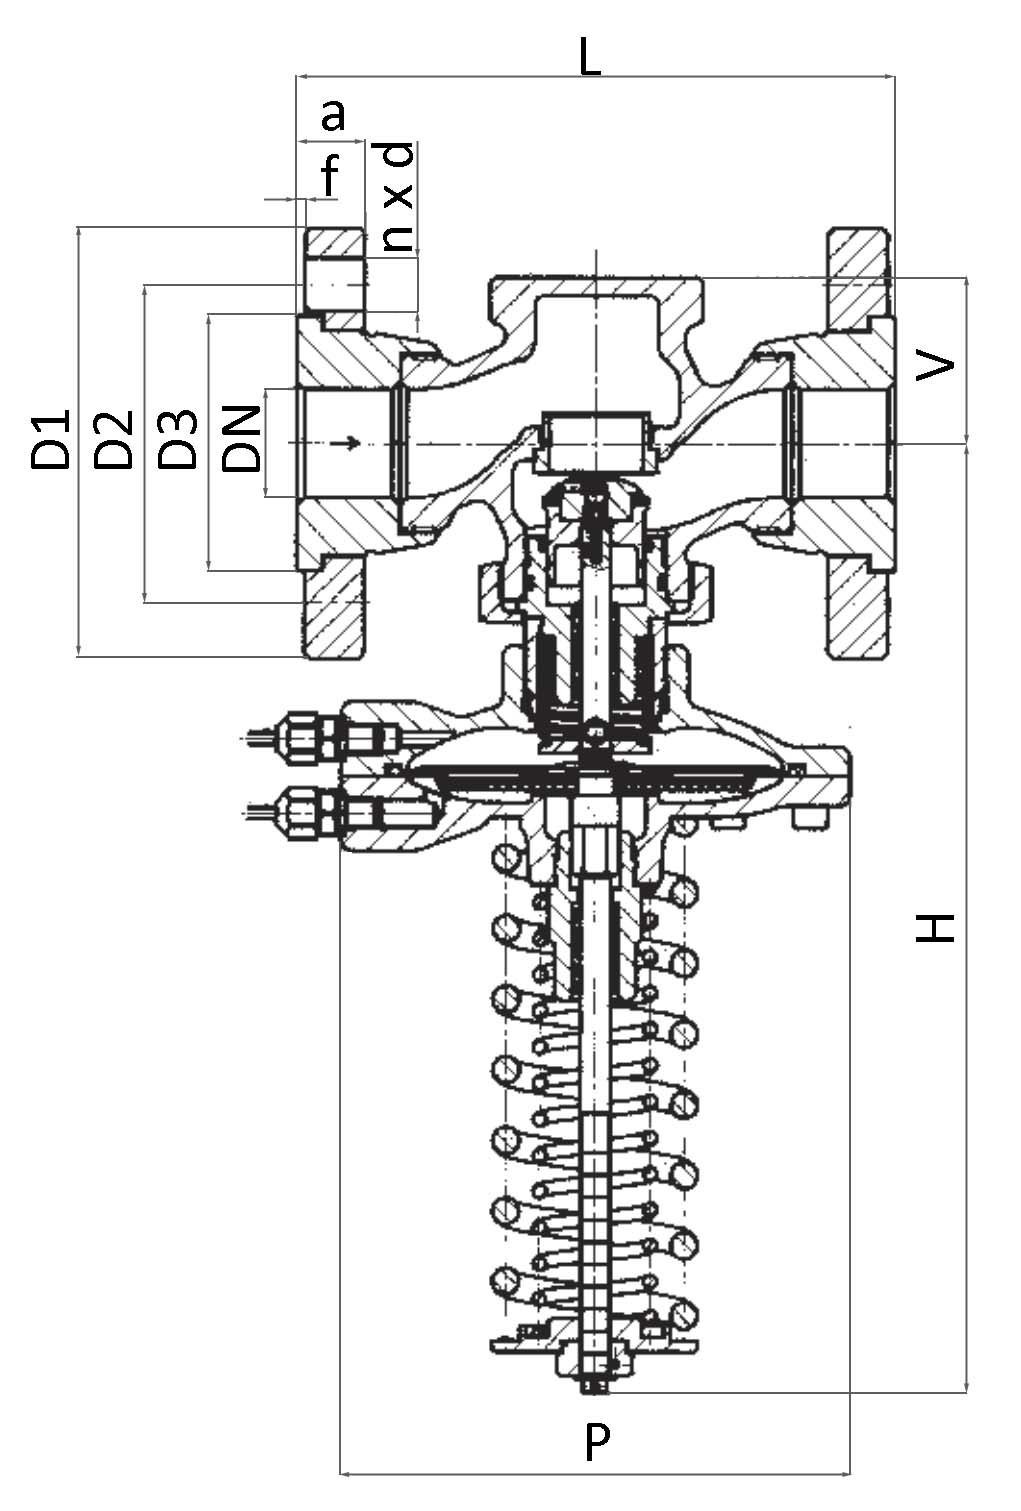 Регулятор перепада давления LDM RD122D Ду15 Ру25 Kvs5 прямого действия, корпус - чугун, фланцевый, Tmax до 150°С, диапазон настройки 24 (60-400 кПа)